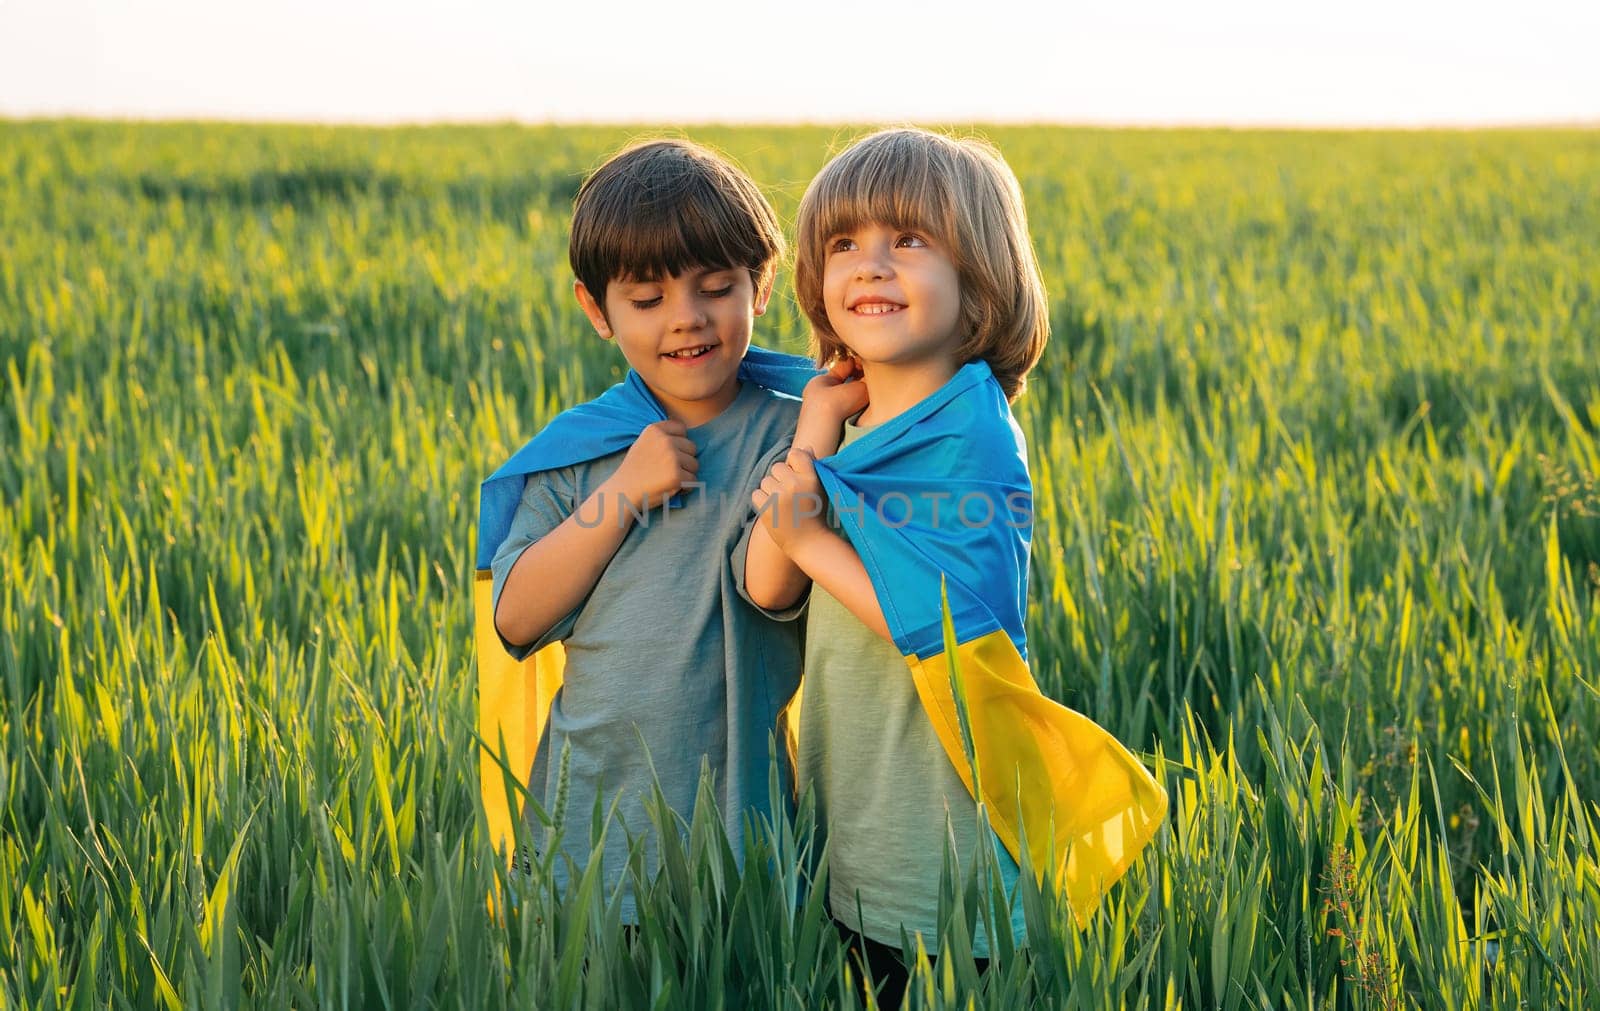 Happy glad boys - Ukrainian patriots children with national flag on in fresh green field. by kristina_kokhanova